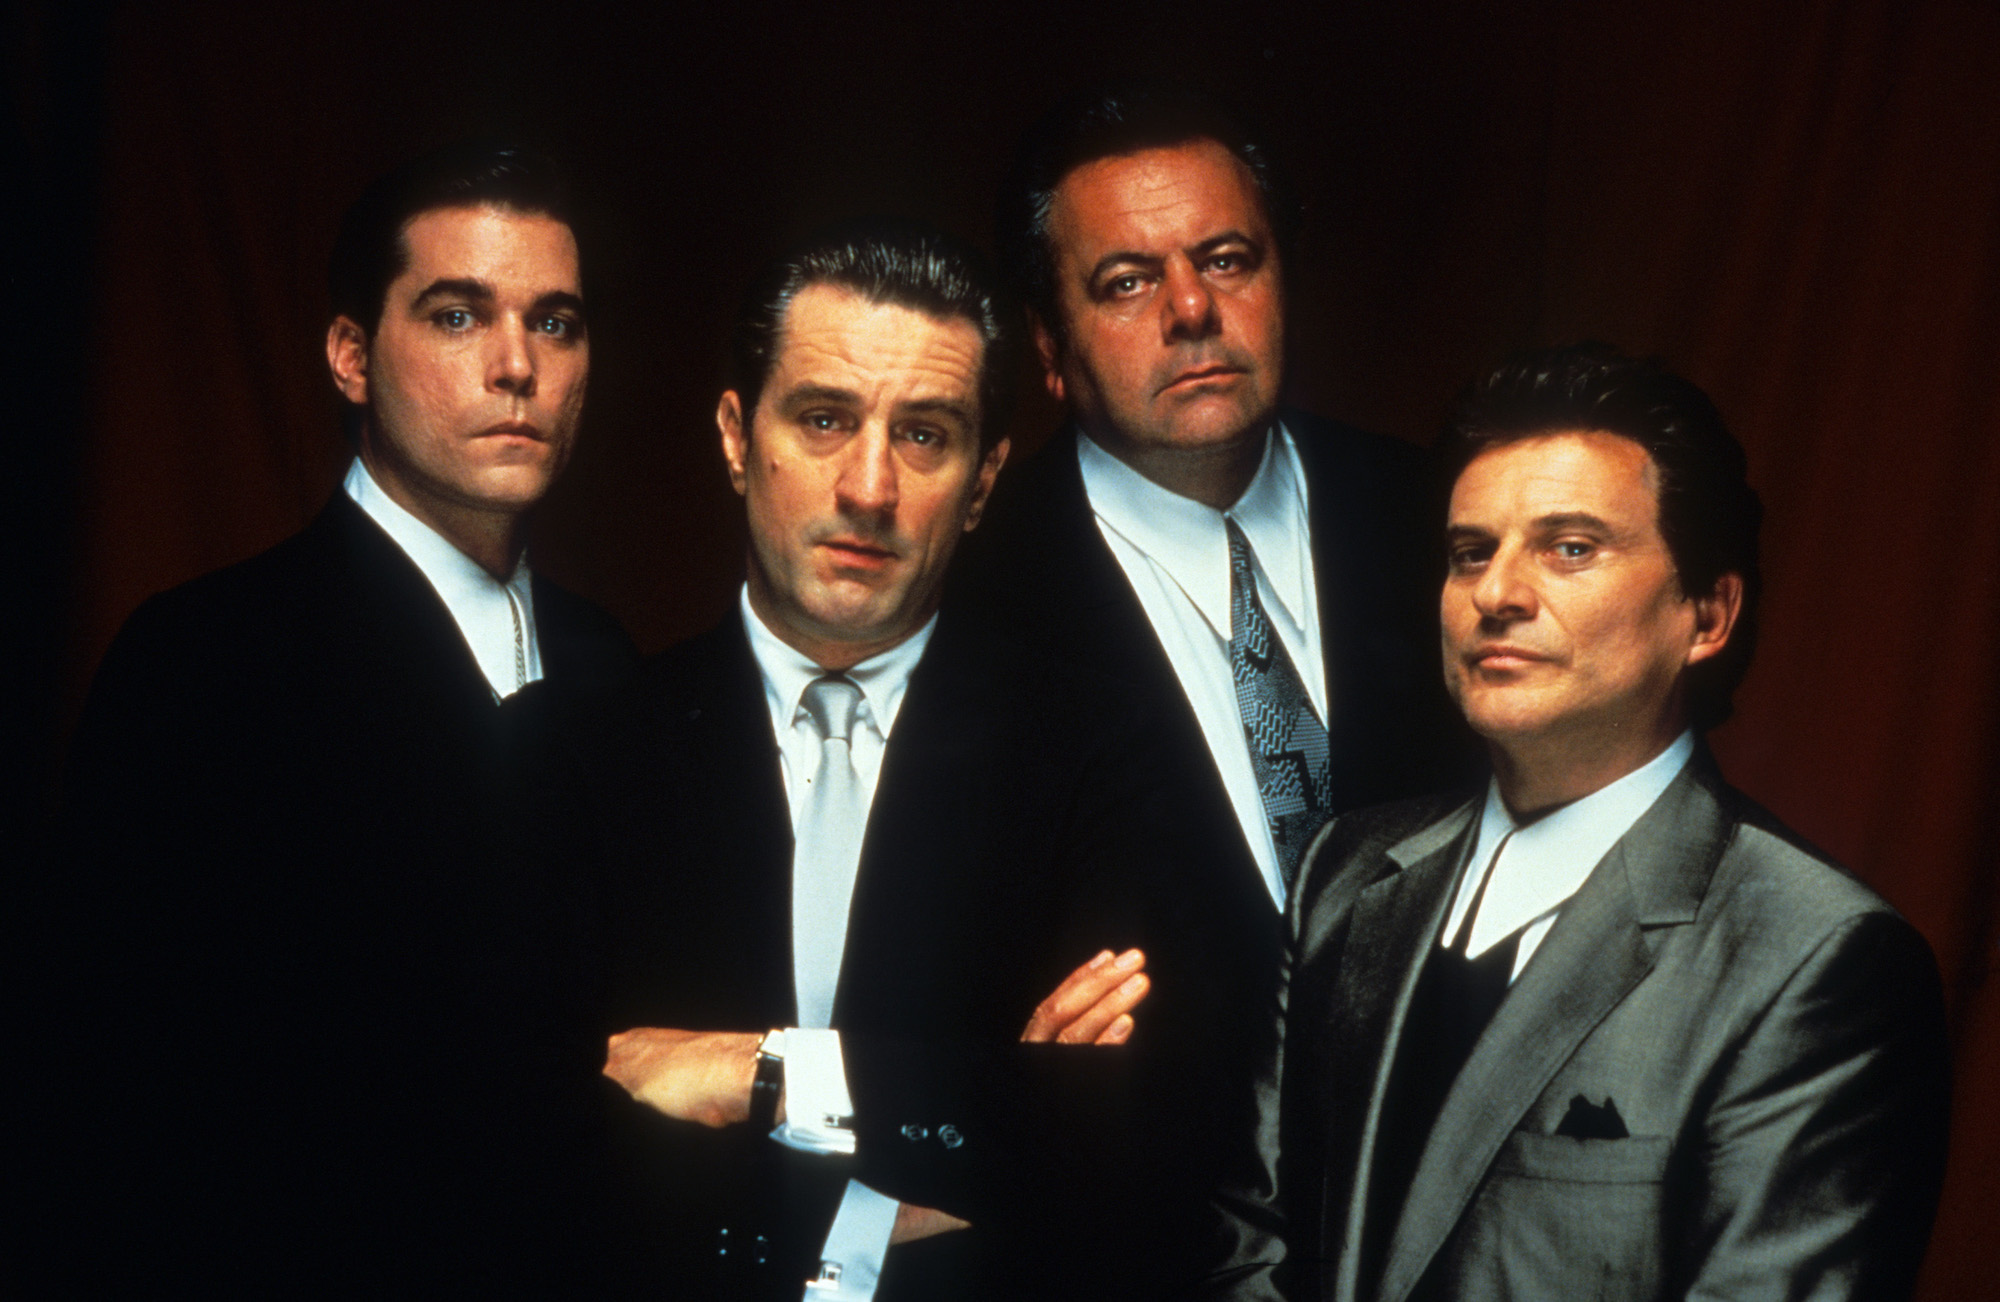 (L-R) Ray Liotta, Robert De Niro, Paul Sorvino, and Joe Pesci in front of a dark background